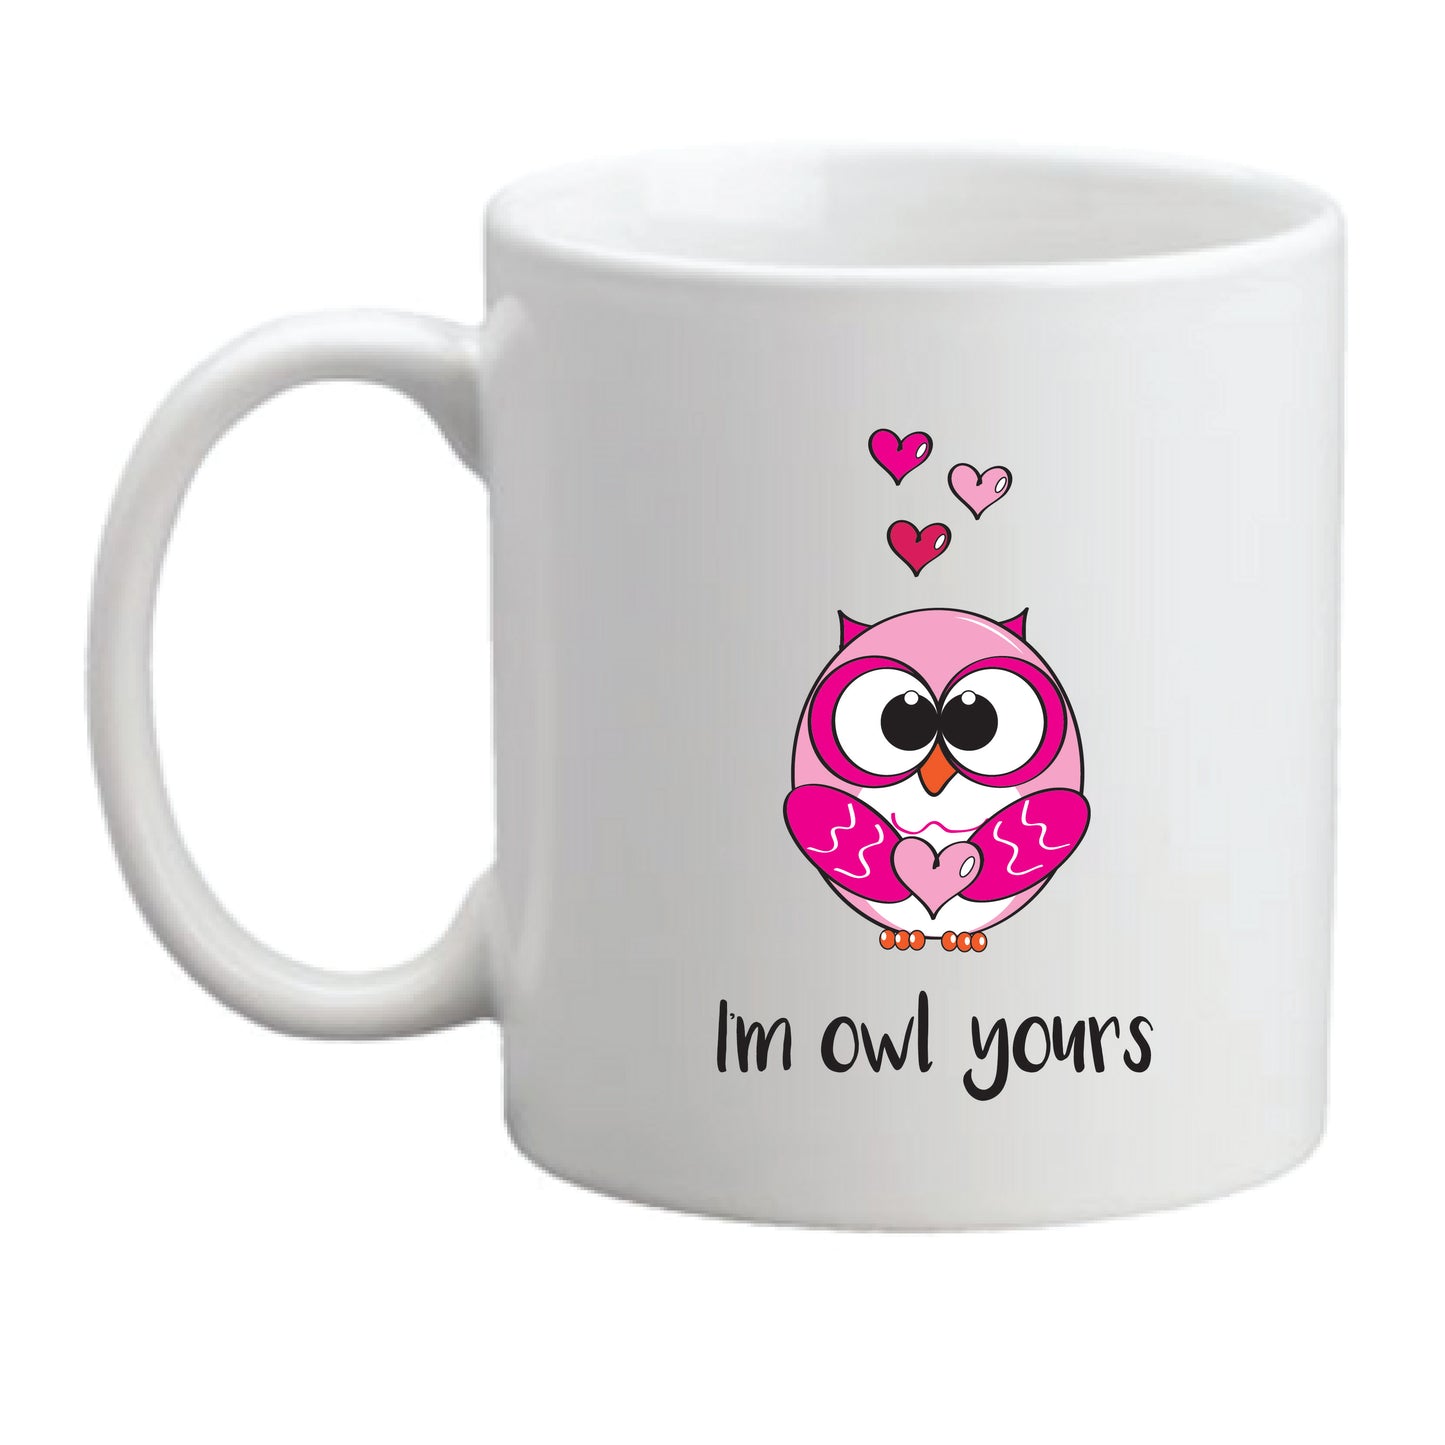 Cutest Corniest Love Mugs Ever